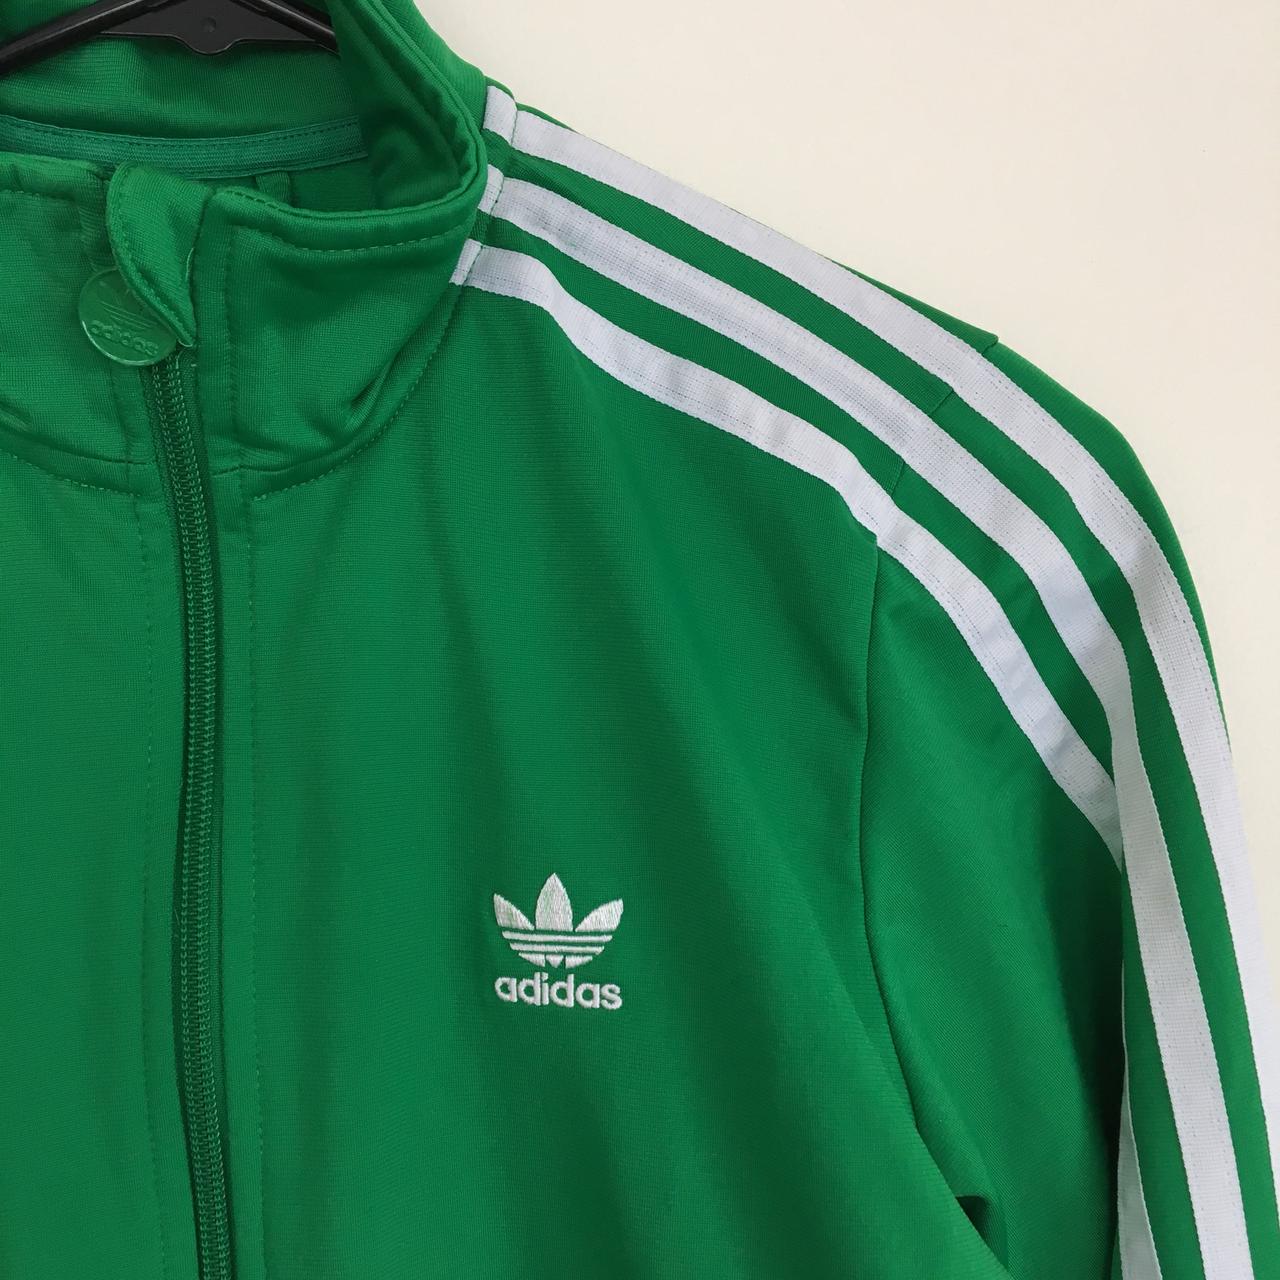 green adidas zip-up jacket! Super hard to find in... - Depop